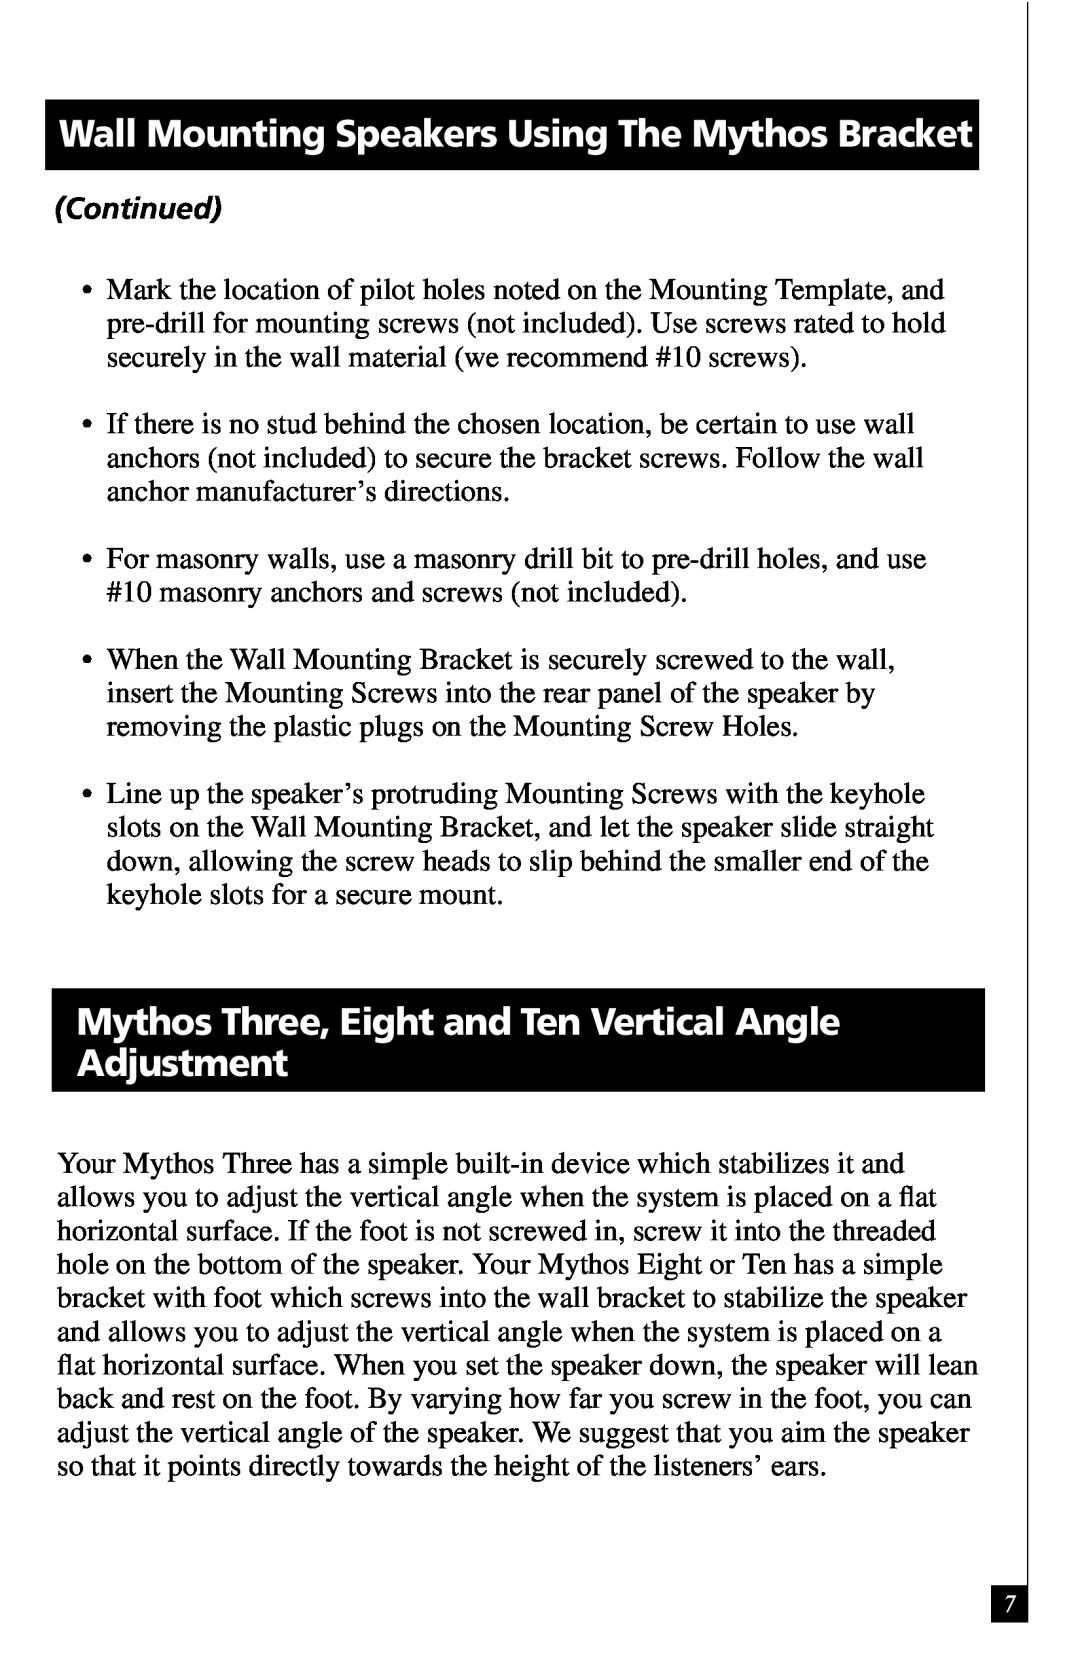 Definitive Technology Mythos Eight & Mythos Ten, Mythos Two Wall Mounting Speakers Using The Mythos Bracket, Continued 